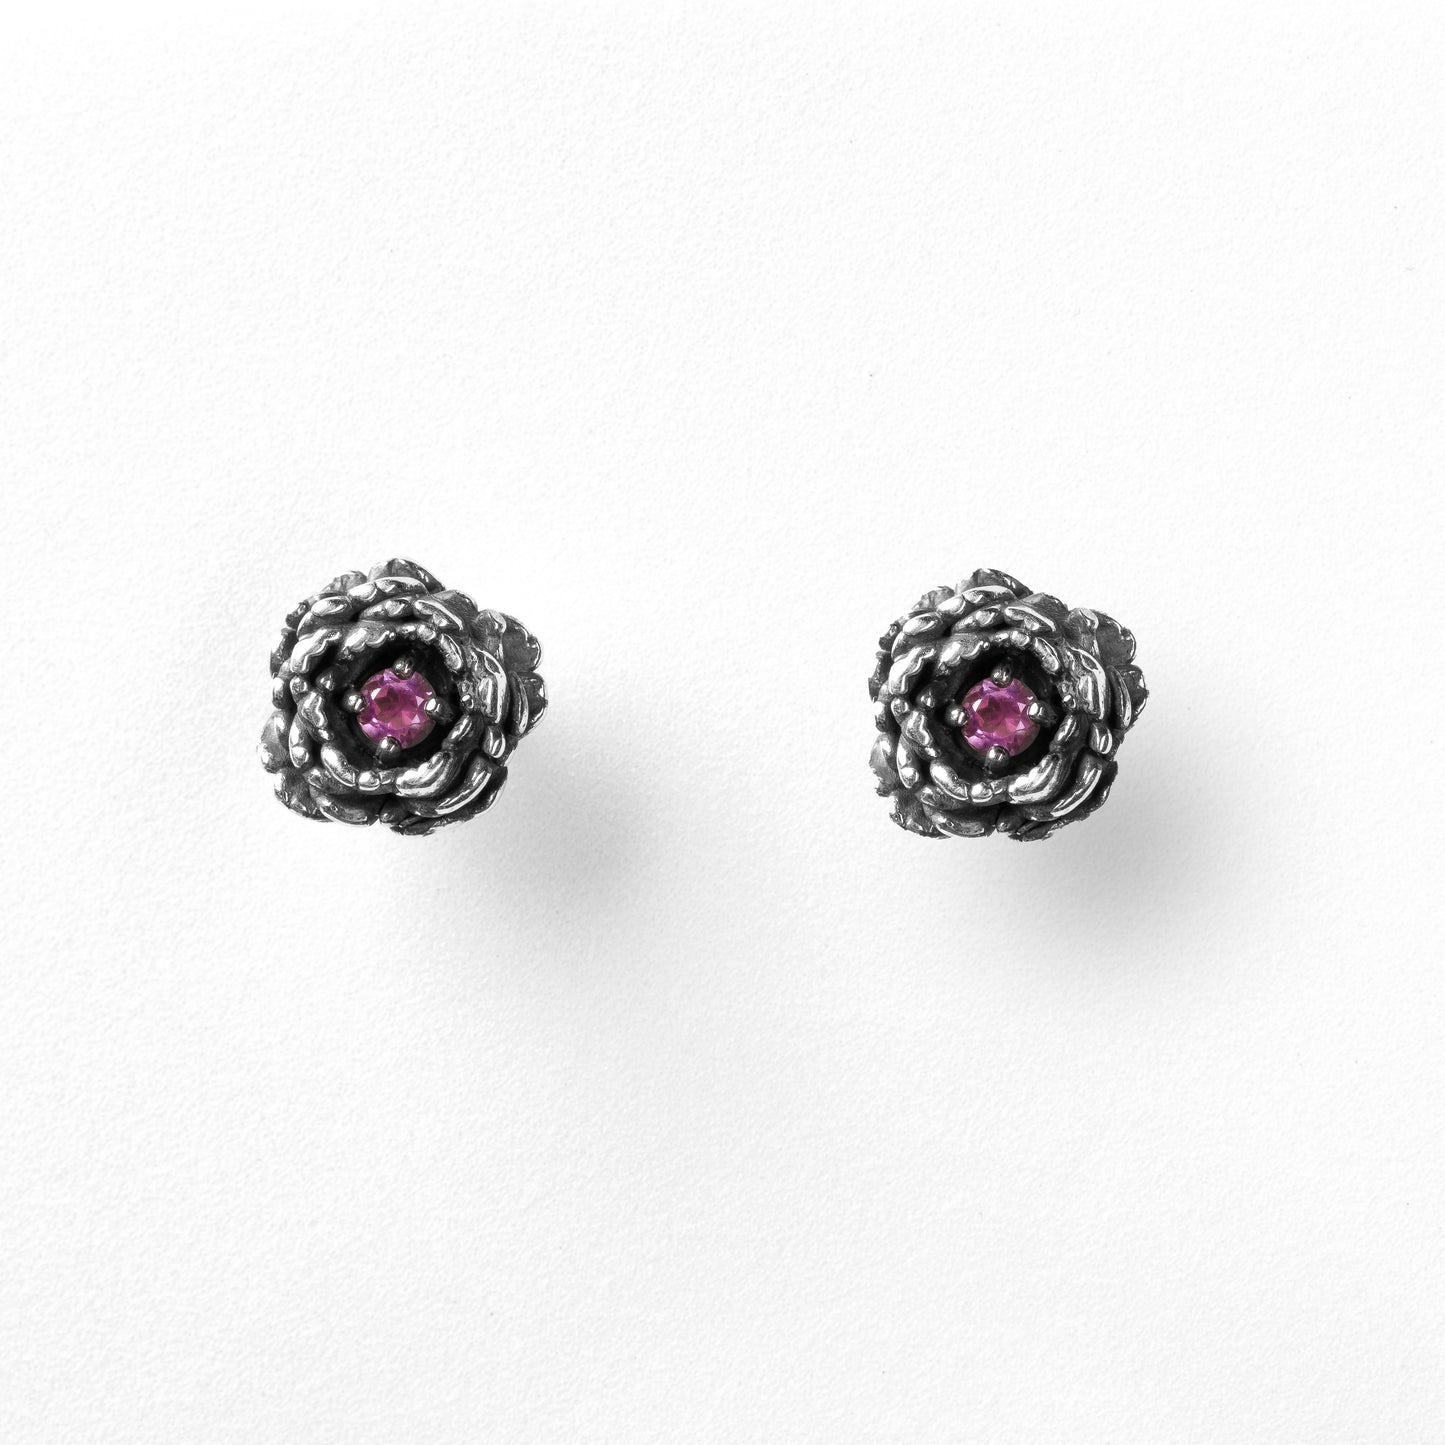 Peony - Peony earrings with amethyst stone